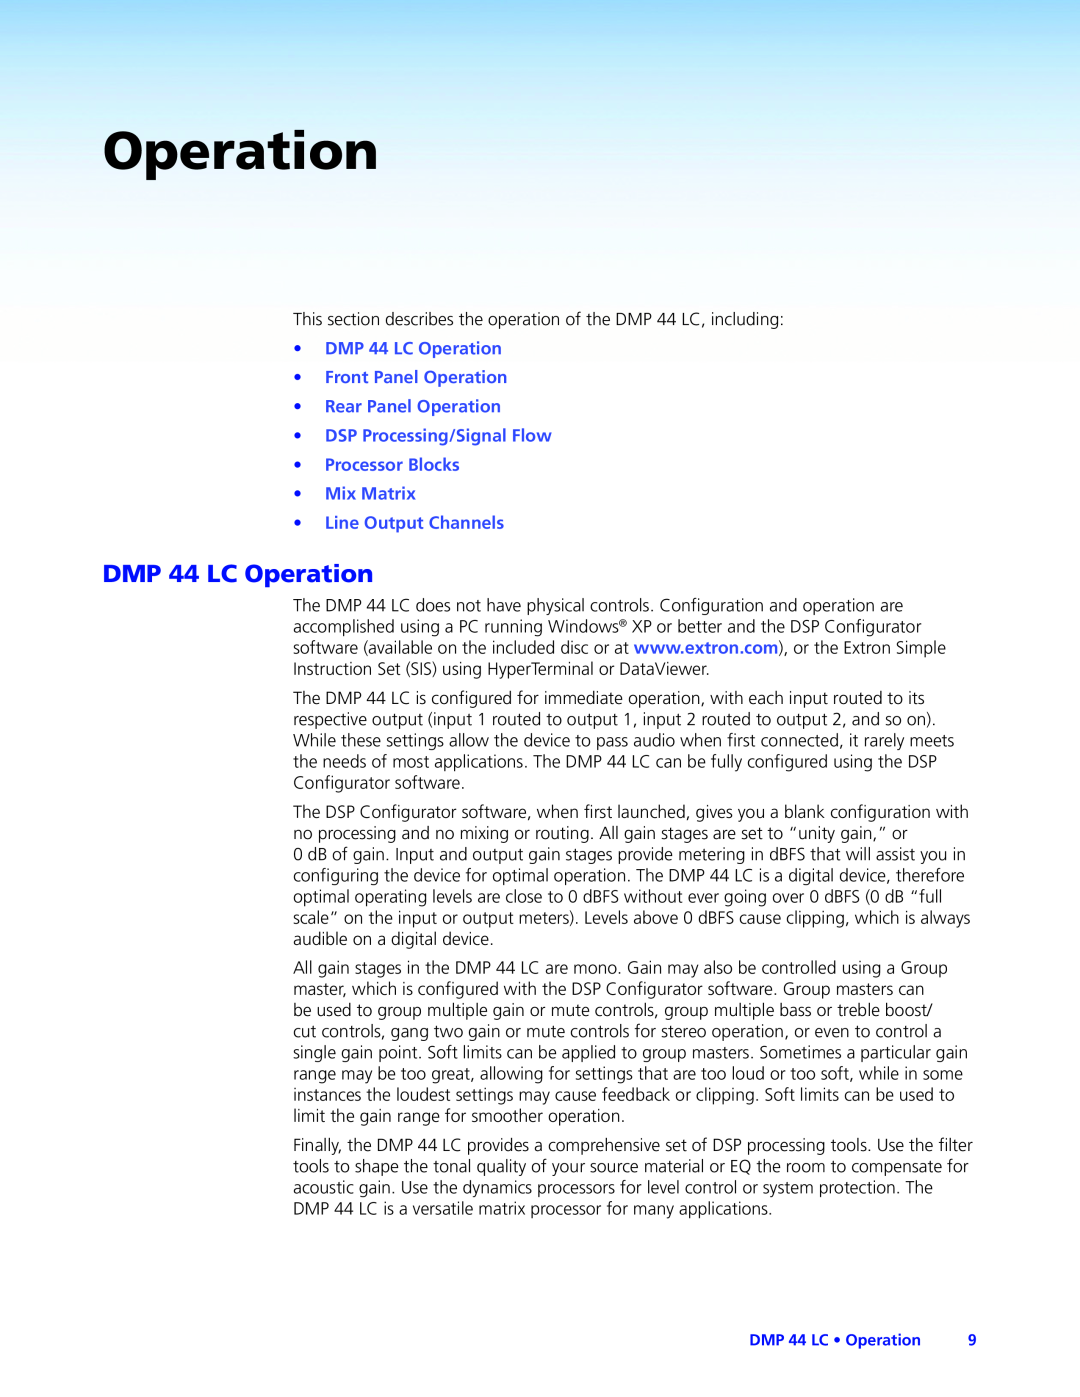 Extron electronic manual •DMP 44 LC Operation •Front Panel Operation, •Processor Blocks •Mix Matrix 